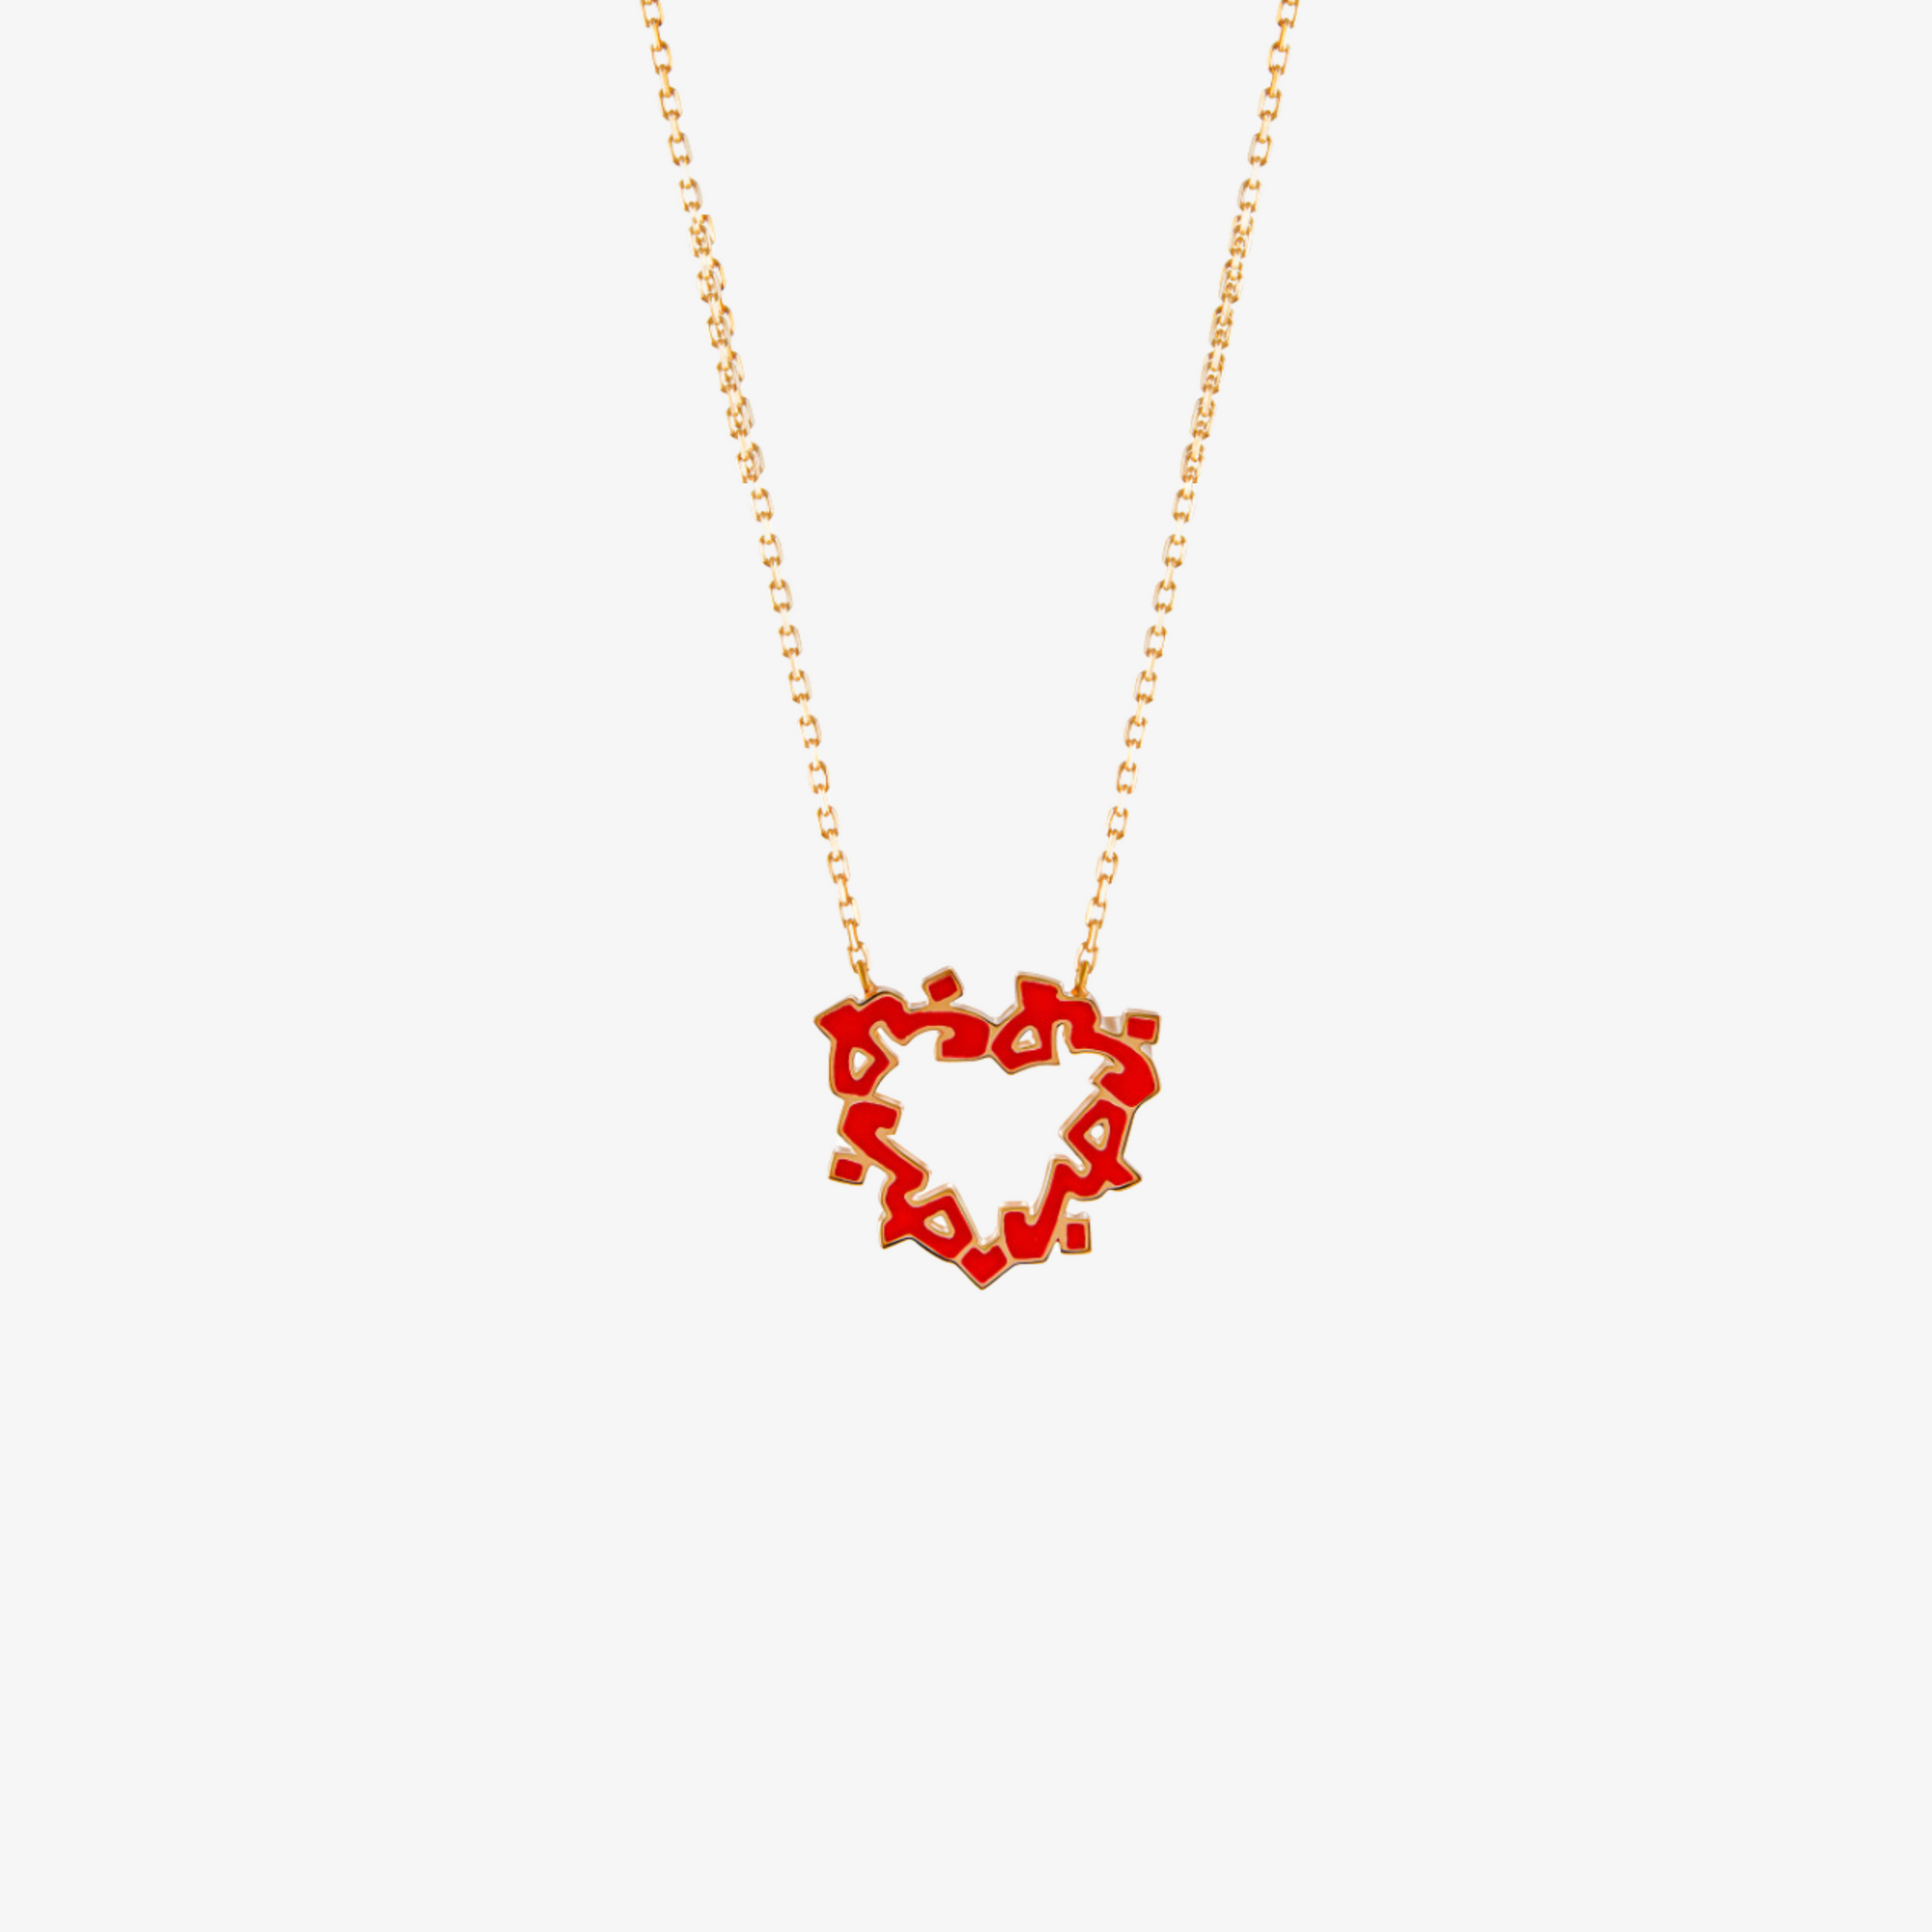 HOBB — Gold Heart Shaped Enamel “Love” Necklace